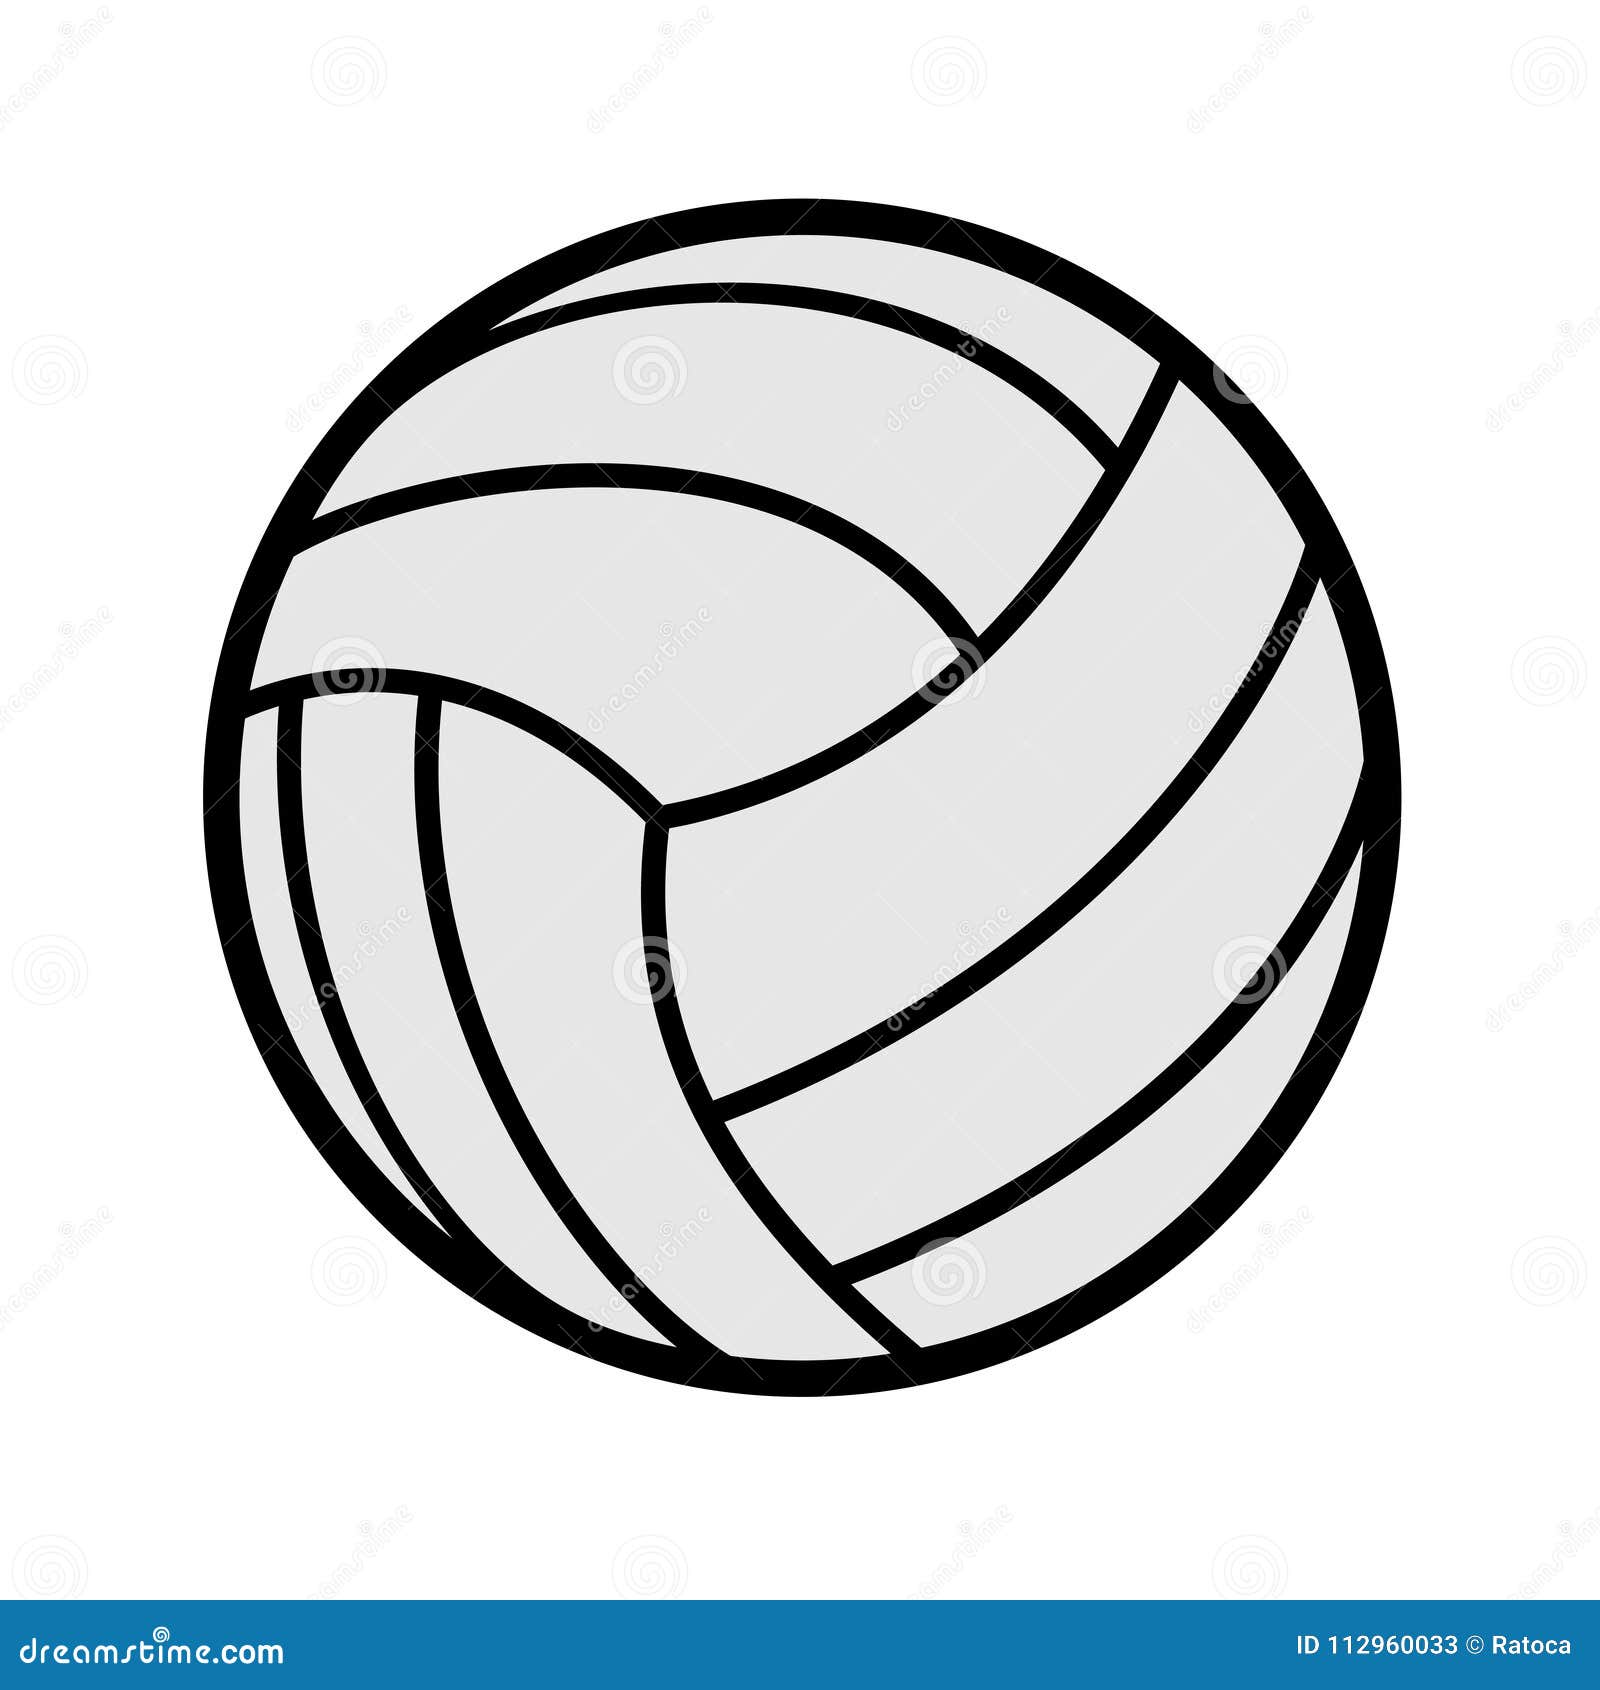 Volleyball symbol design stock vector. Illustration of sphere - 112960033